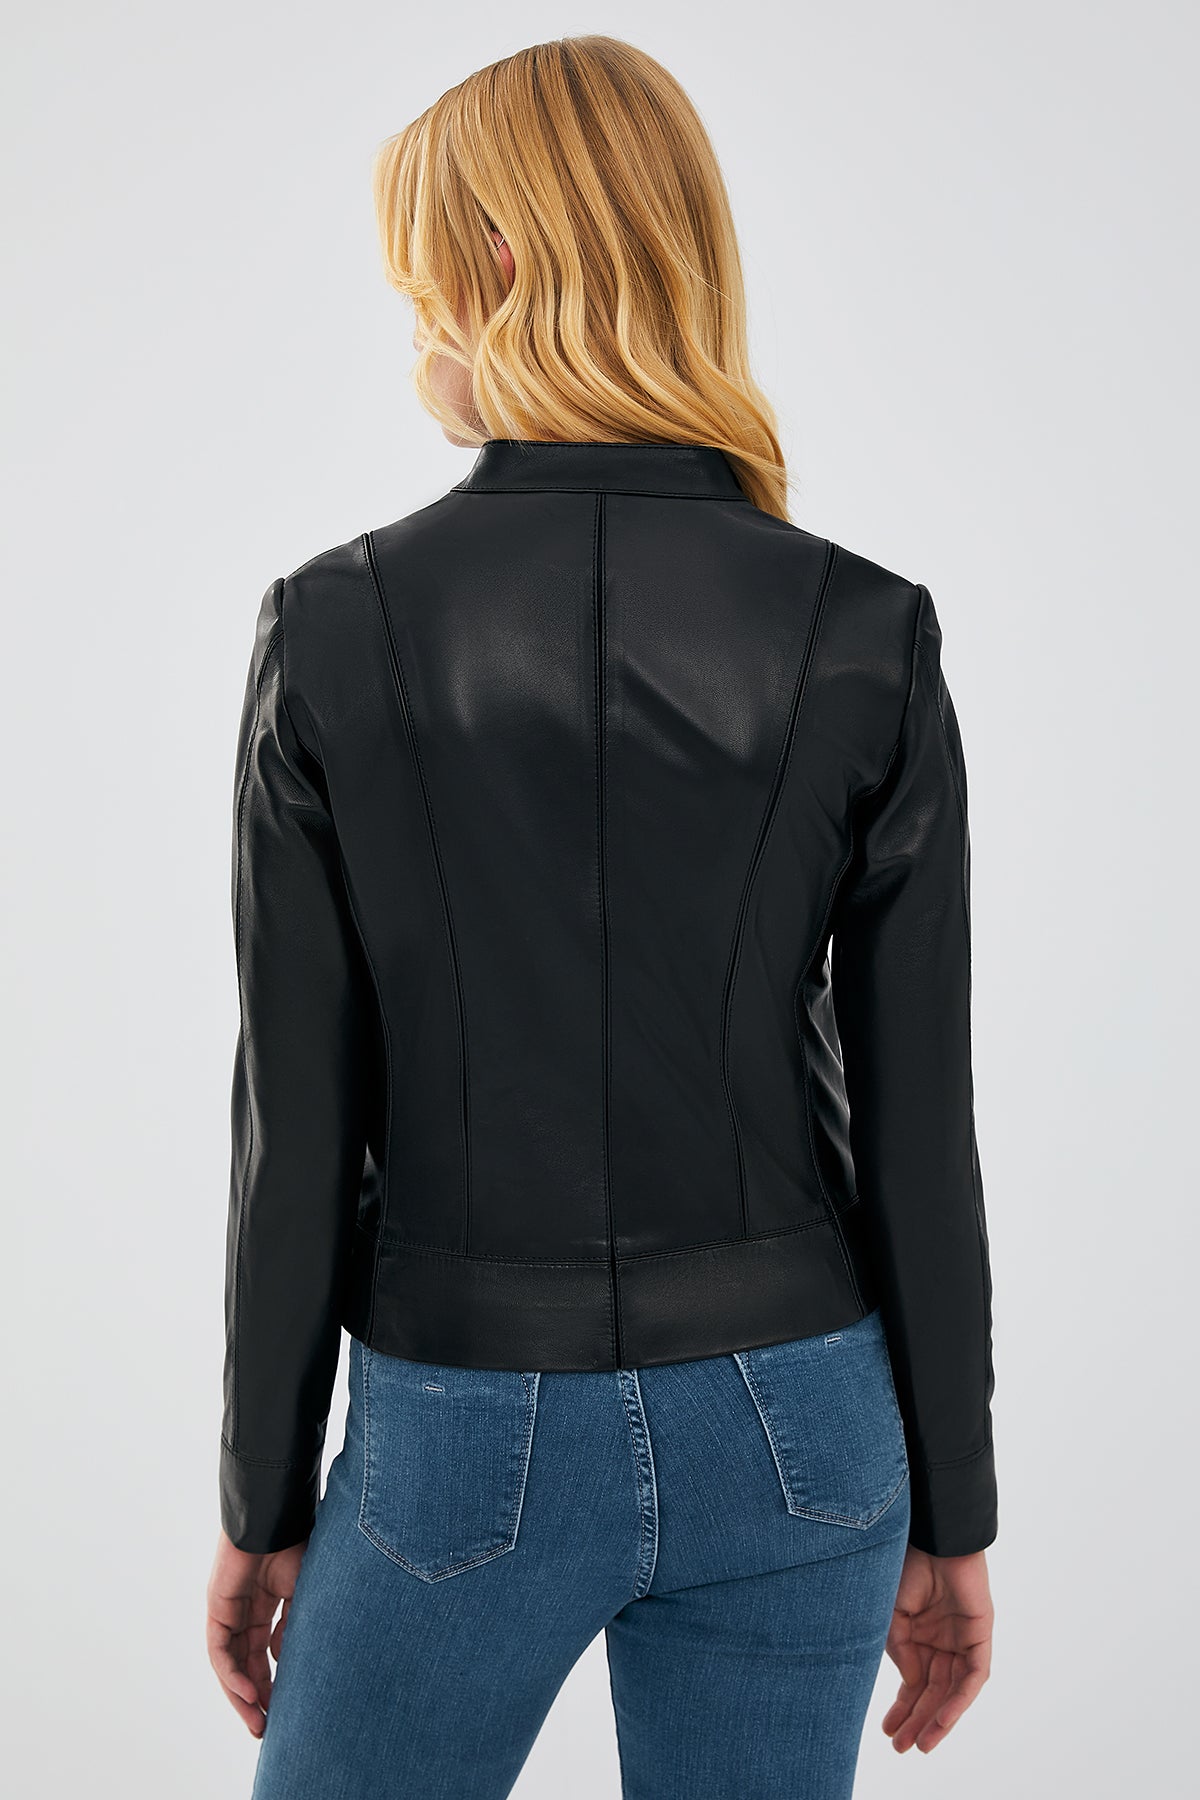 Tiffany Kadın Siyah Streç-Fit Deri Ceket